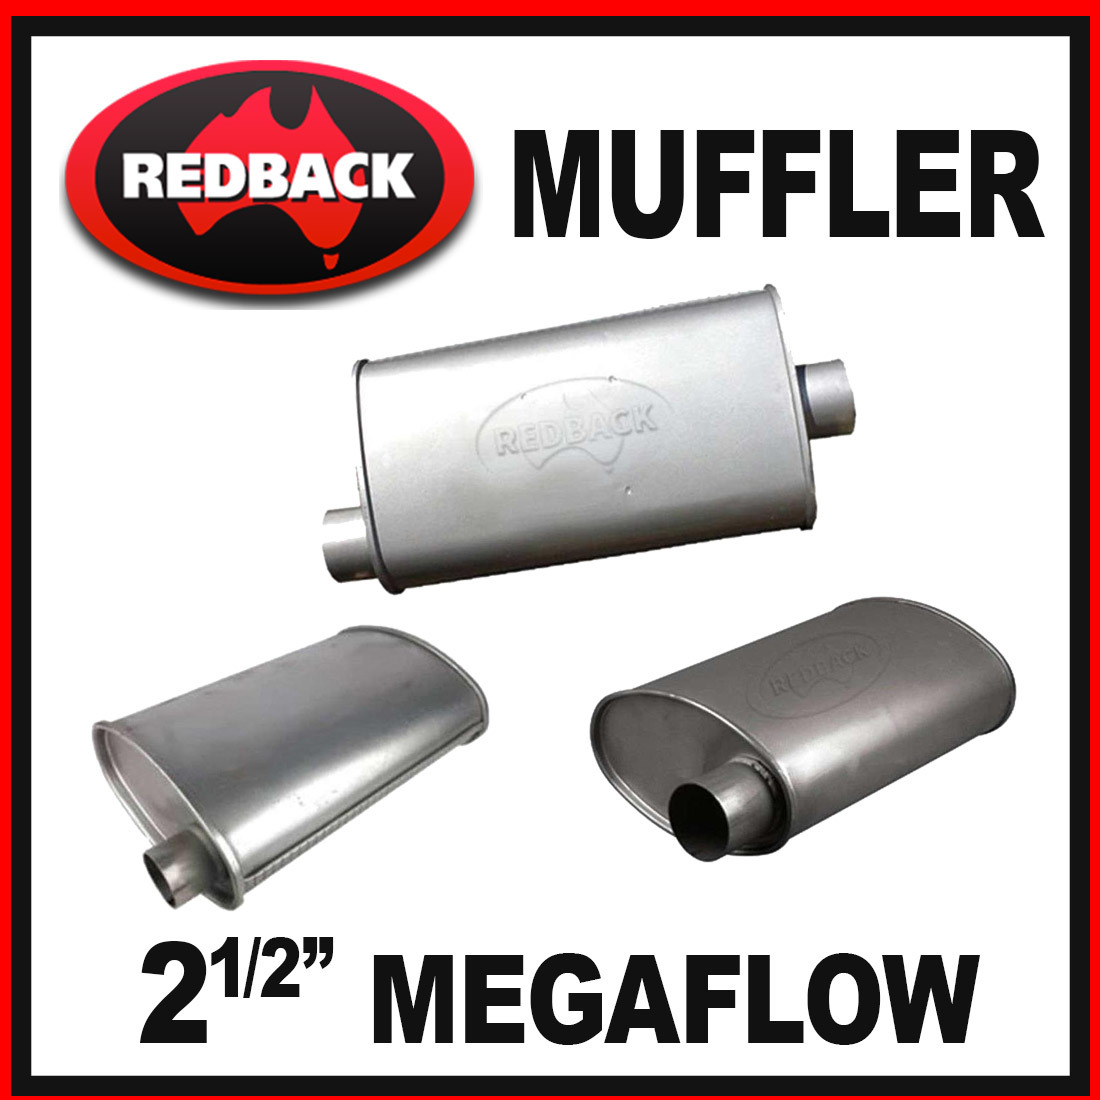 Redback 2 1/2" Megaflow Muffler image